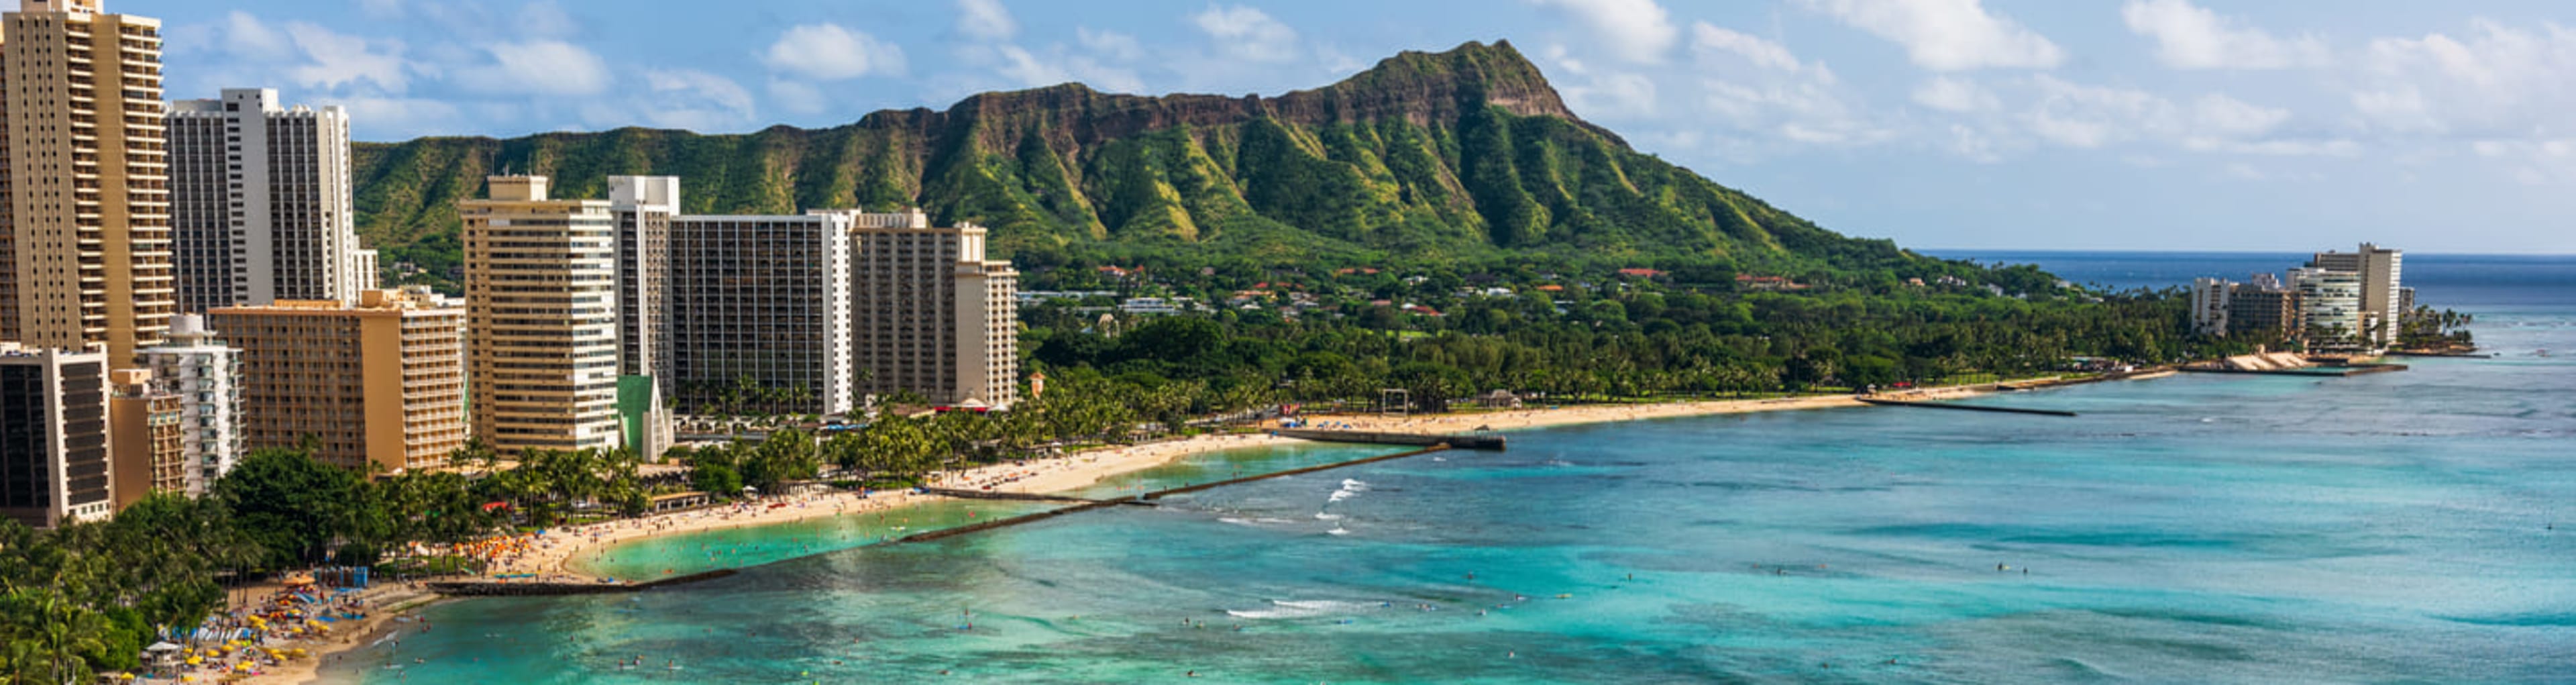 Honolulu skyline including the city, Waikiki Beach and Diamond Head